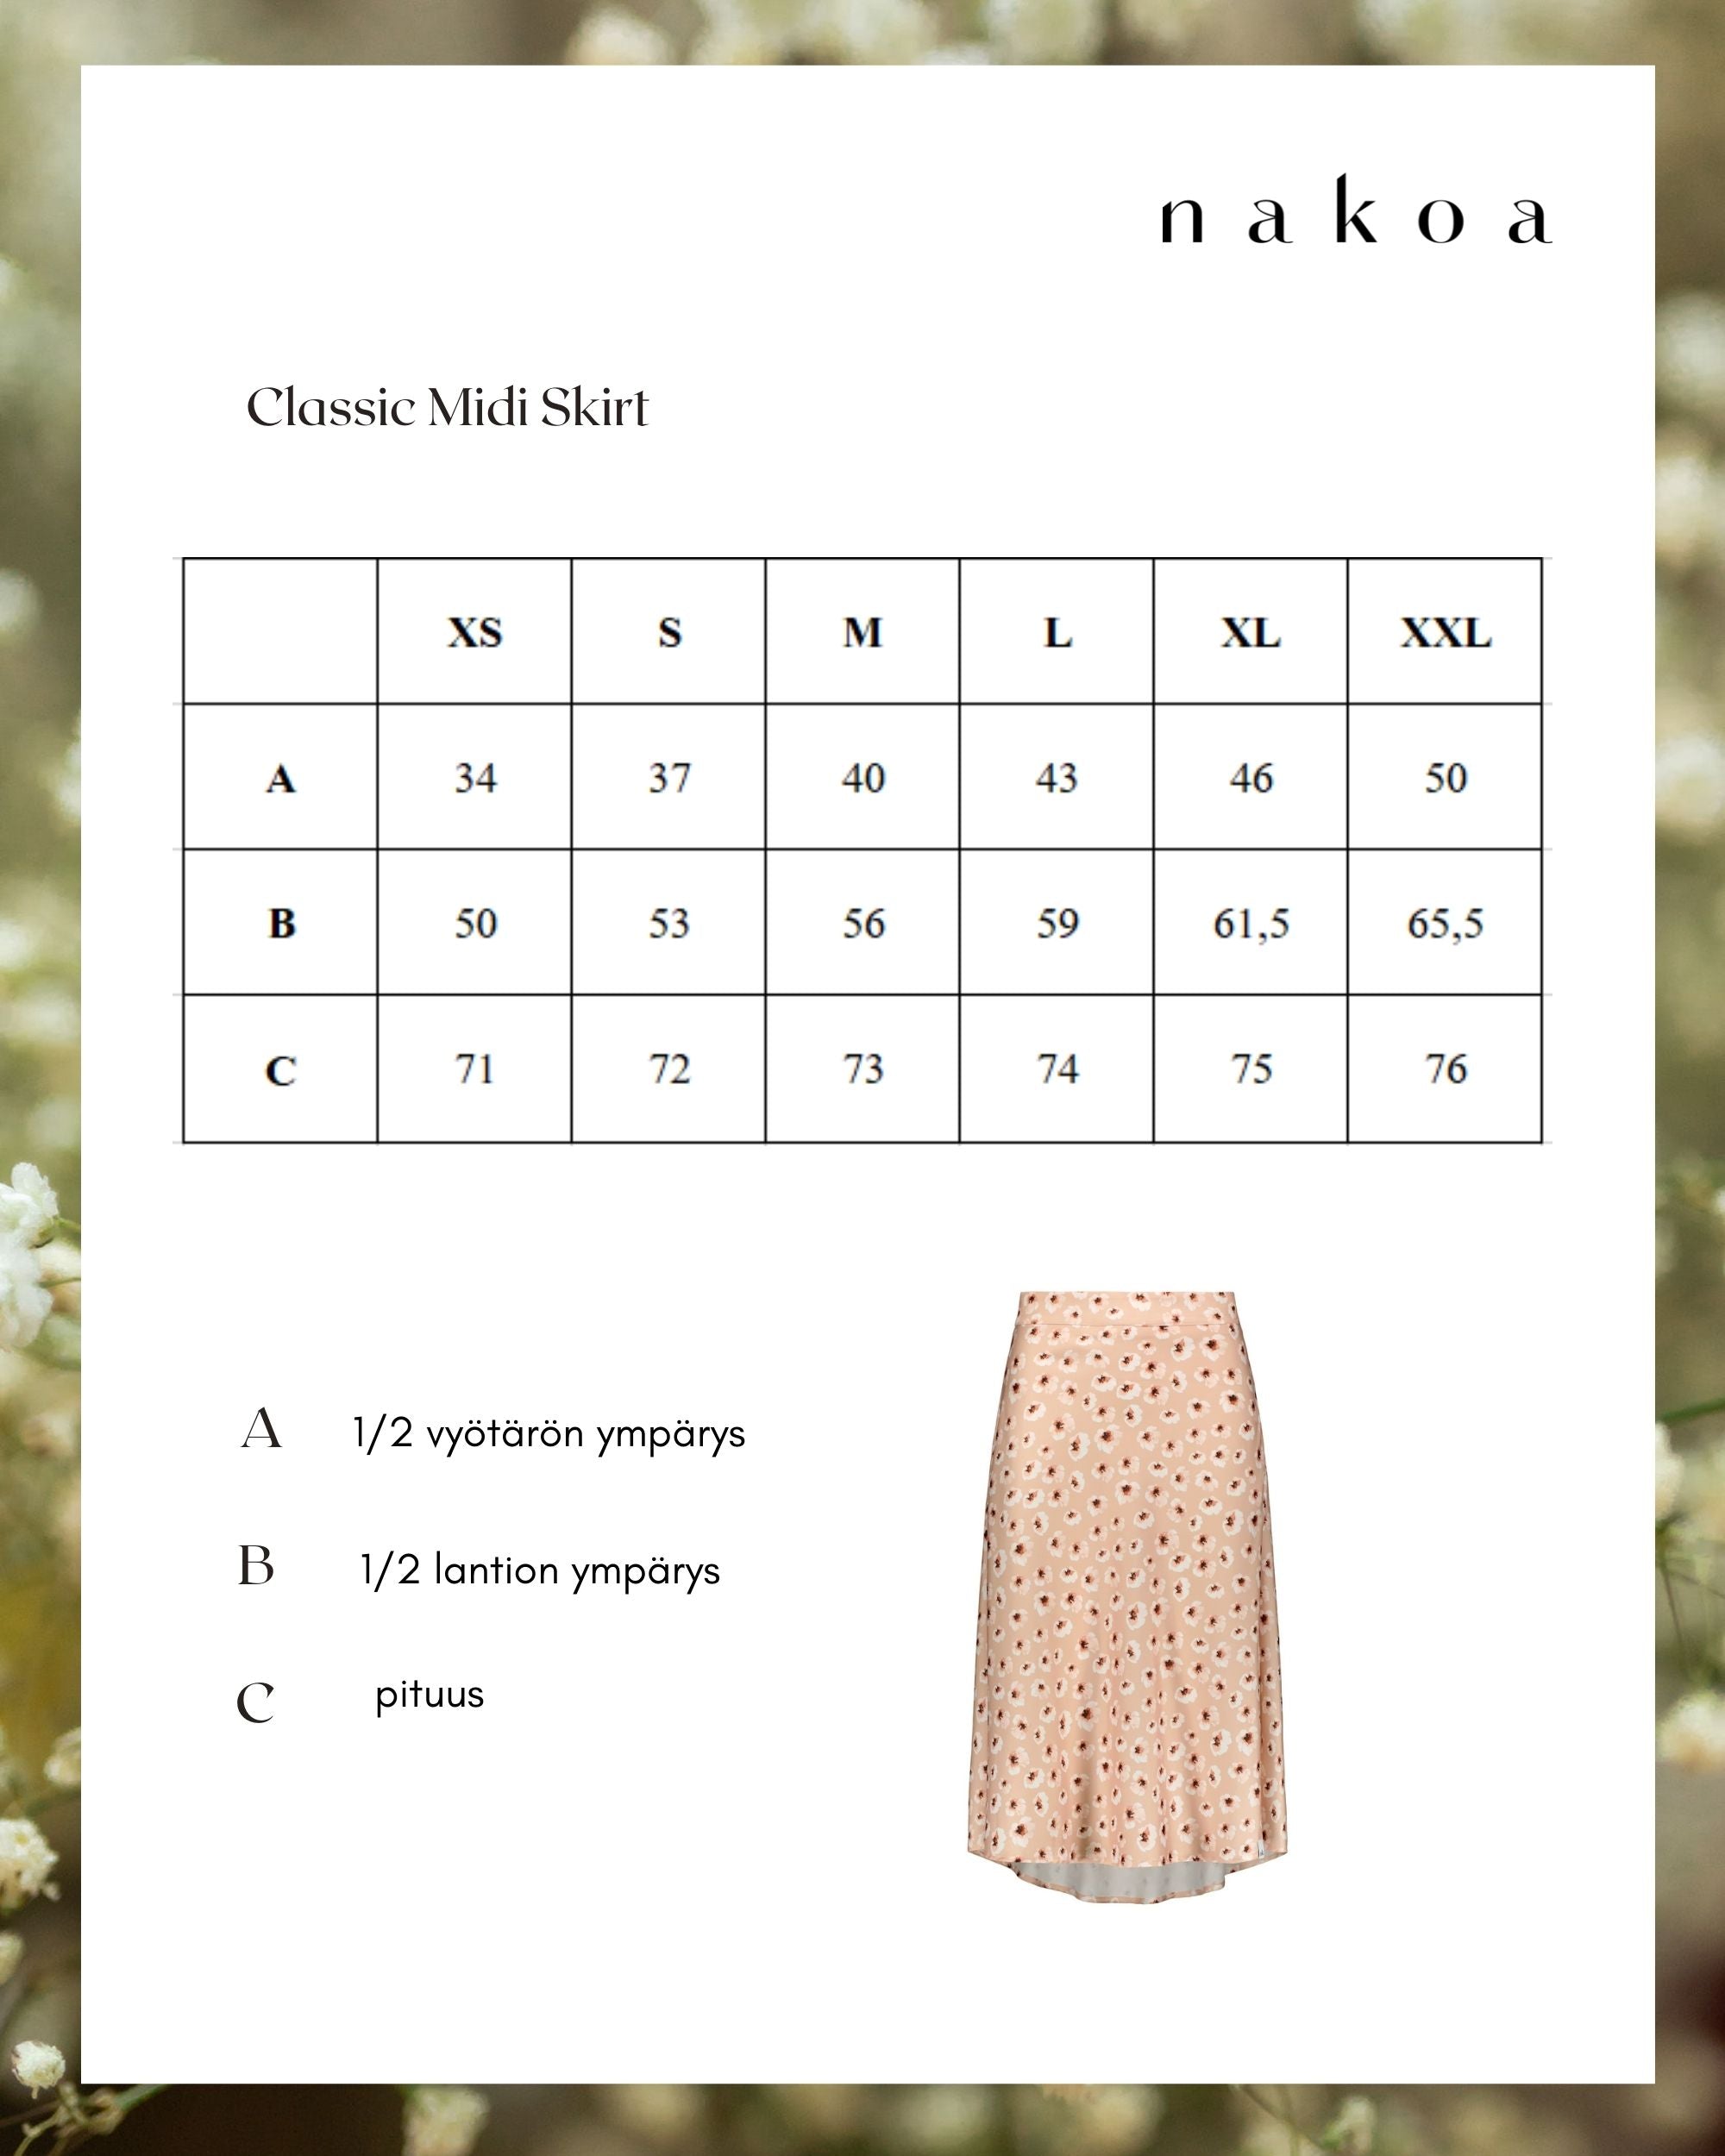 Classic Midi Skirt, Blushing Blossoms